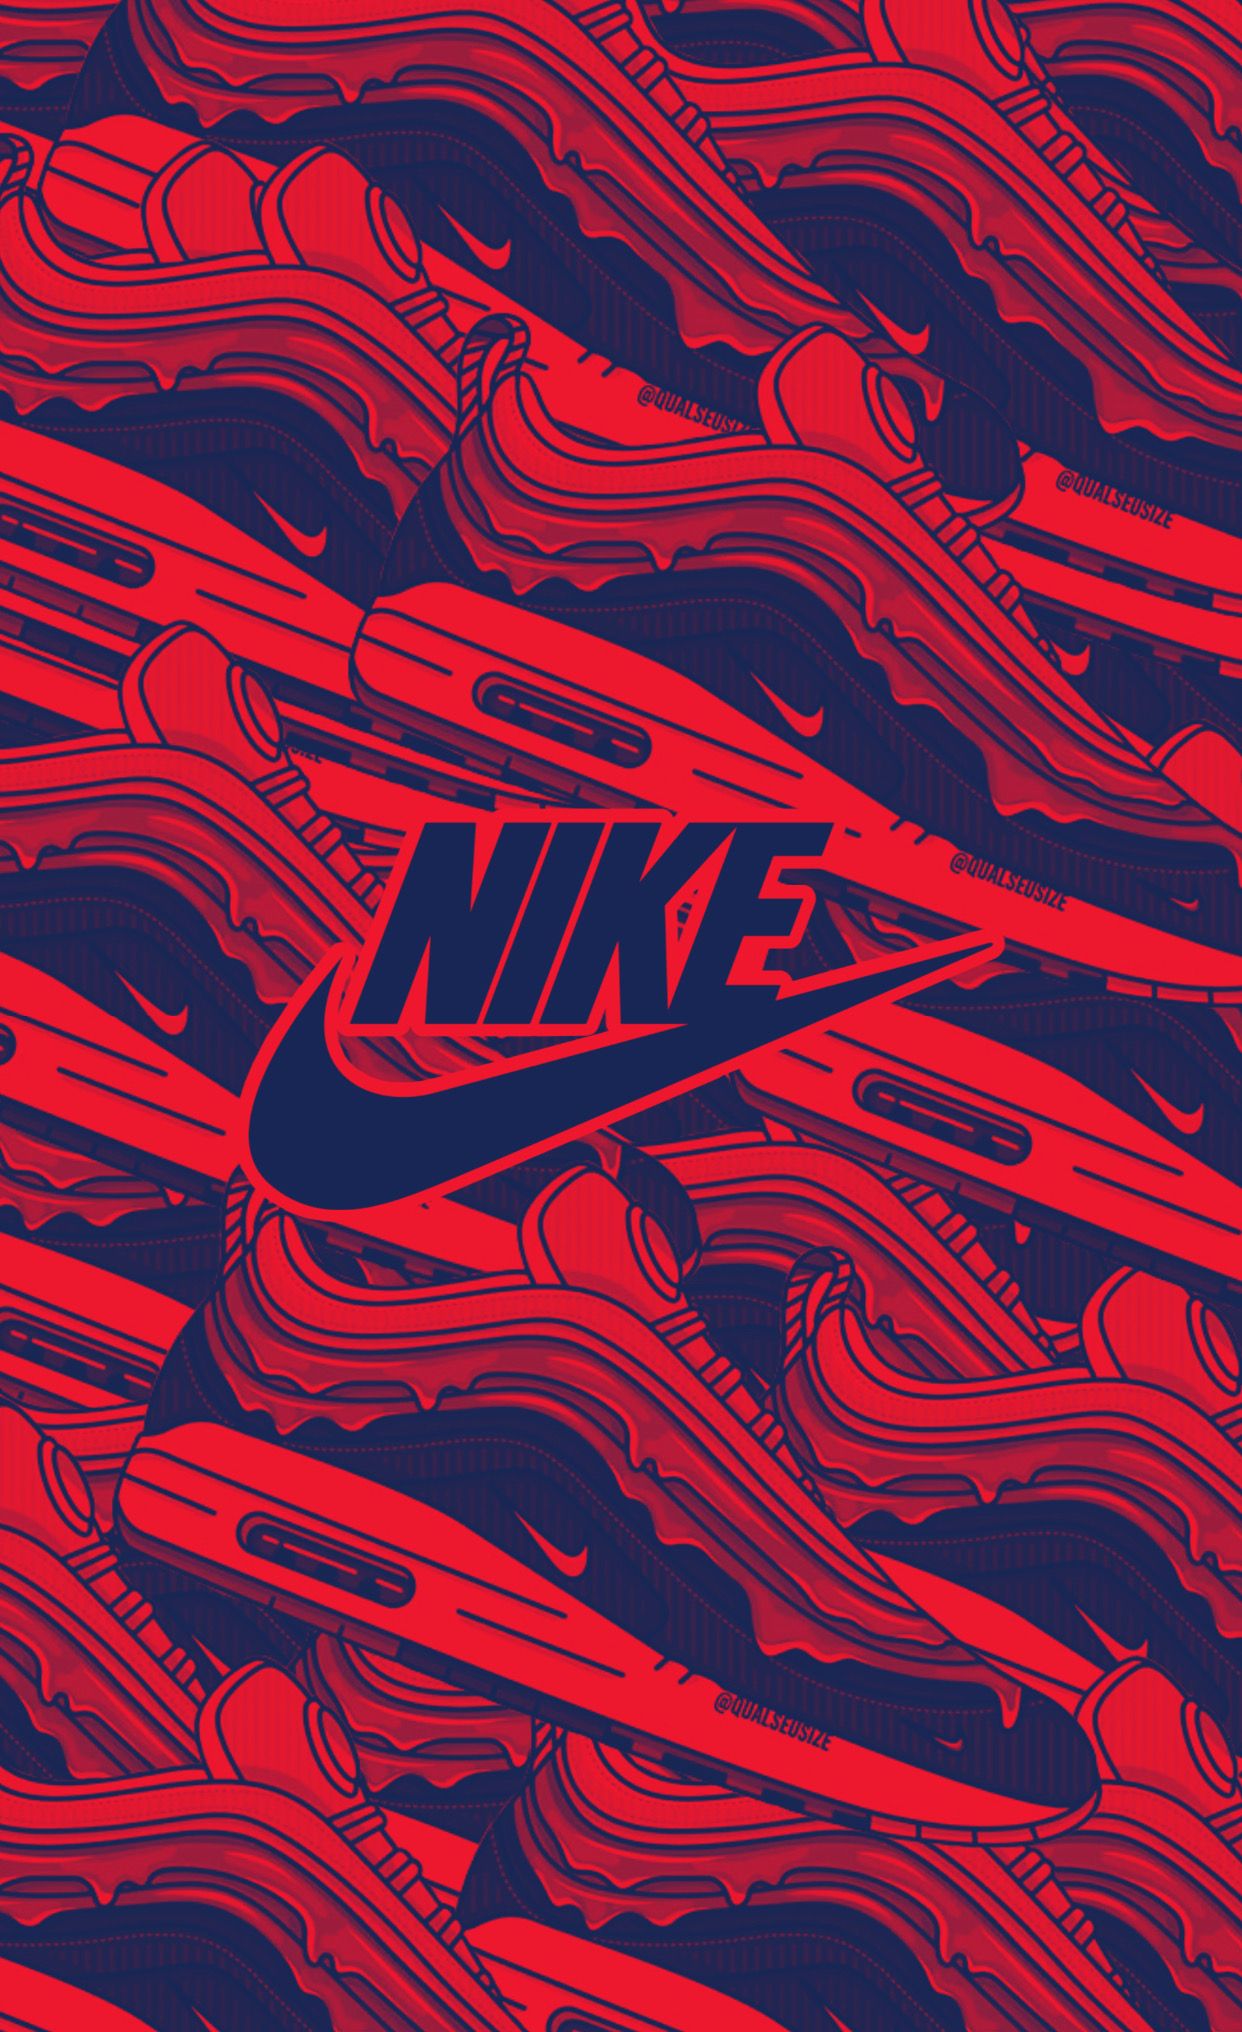 Mm. Nike wallpaper, Nike art, Cool nike wallpaper